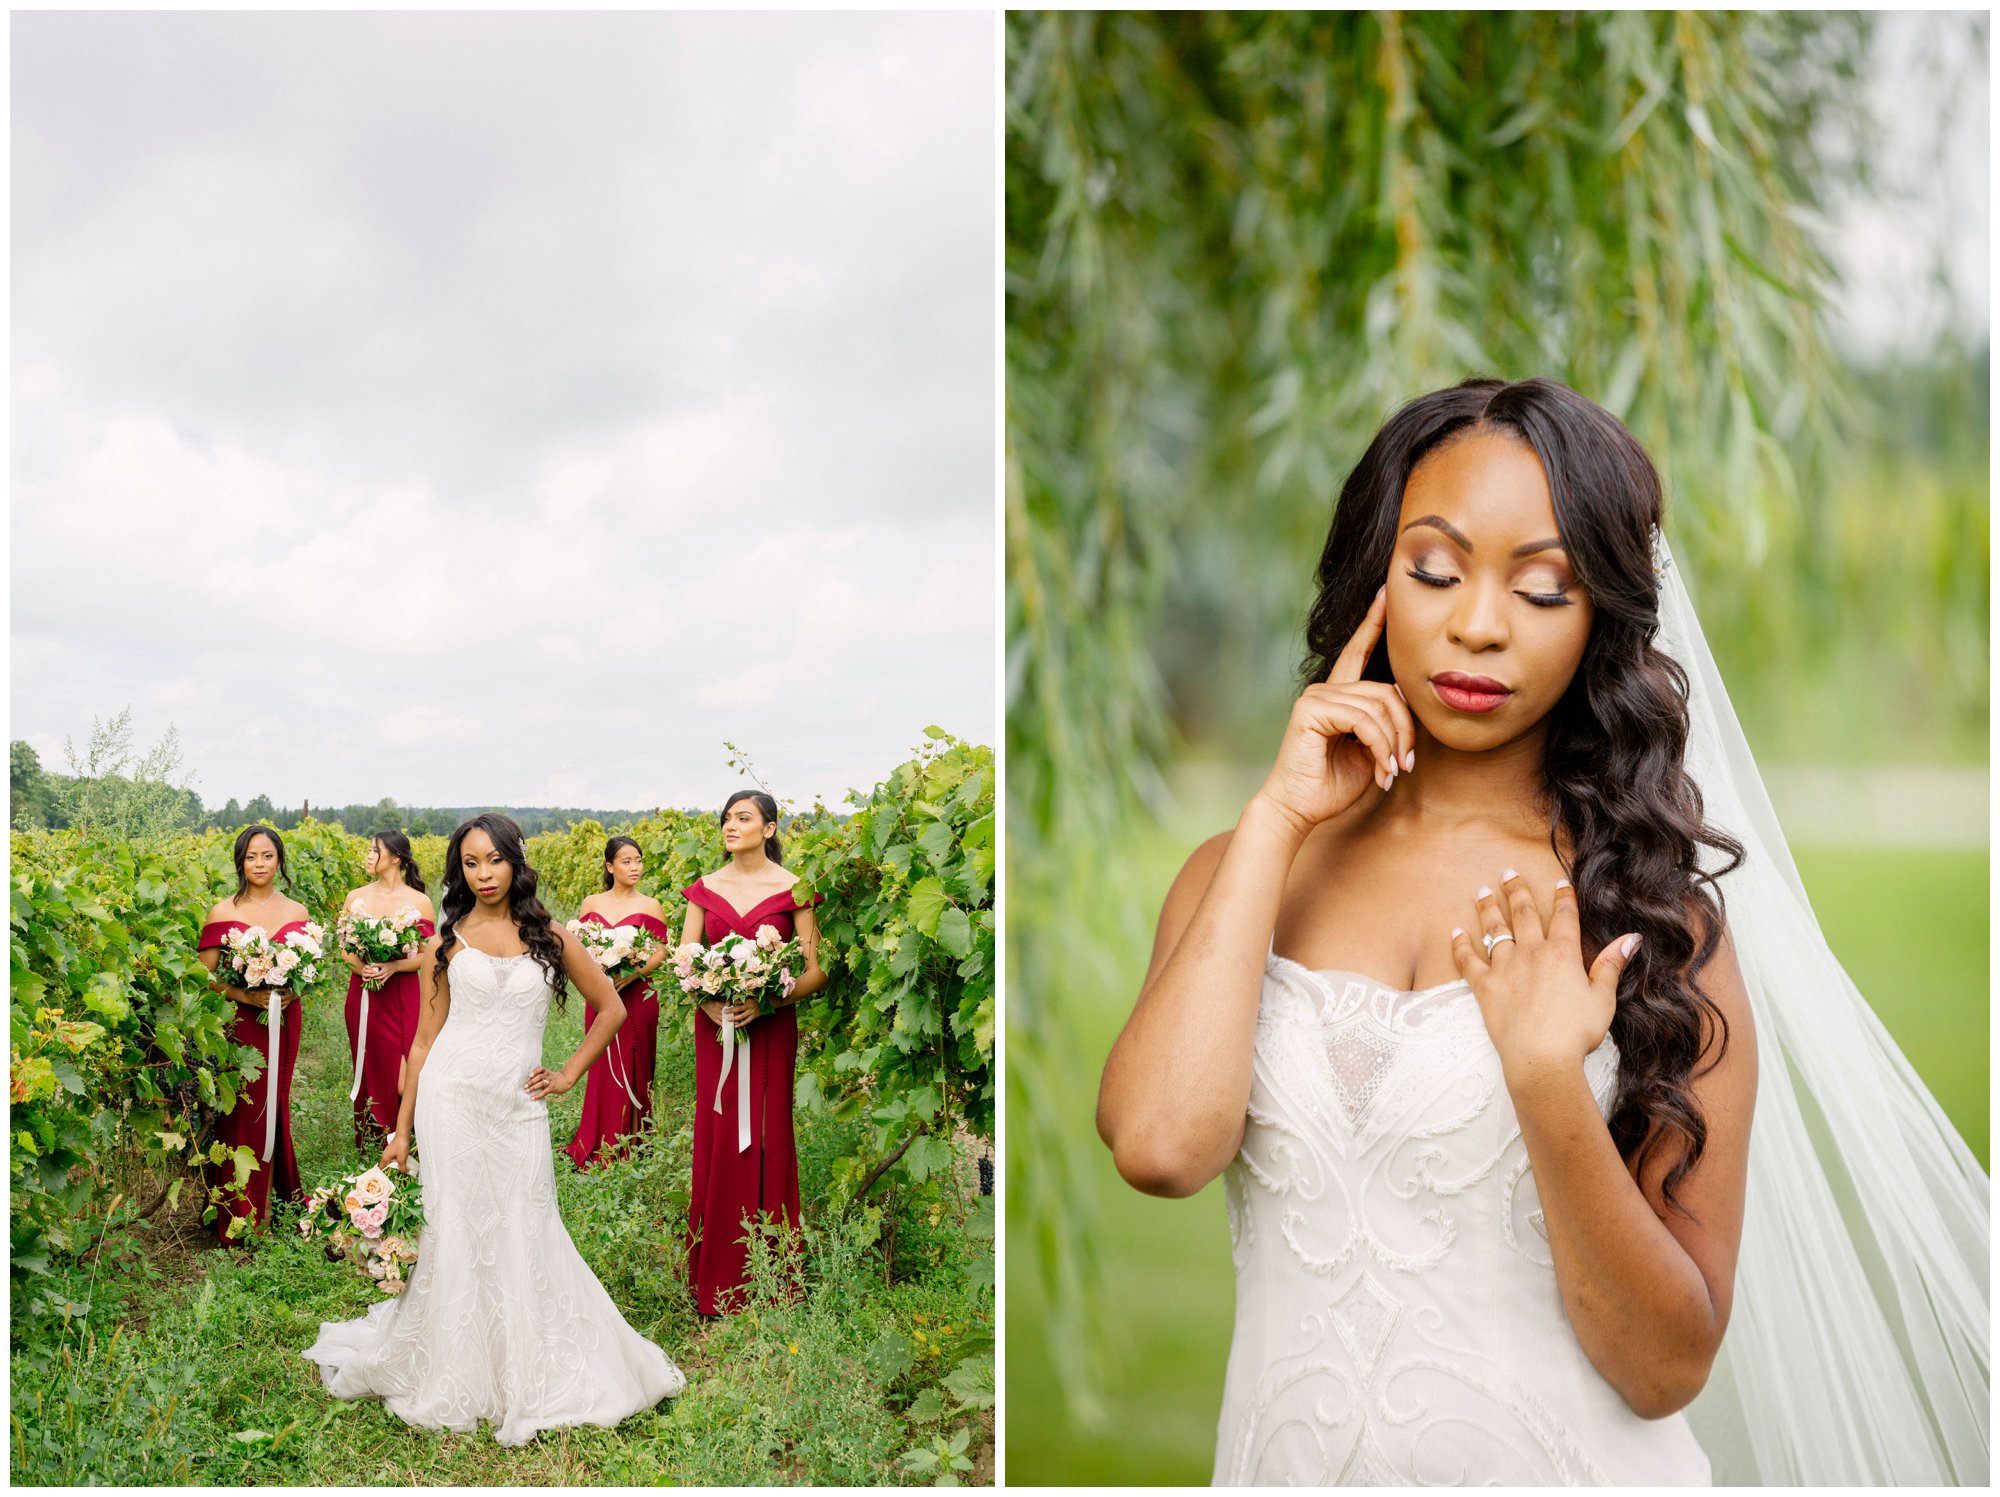 Willow Springs Winery wedding photos in Markham Ontario